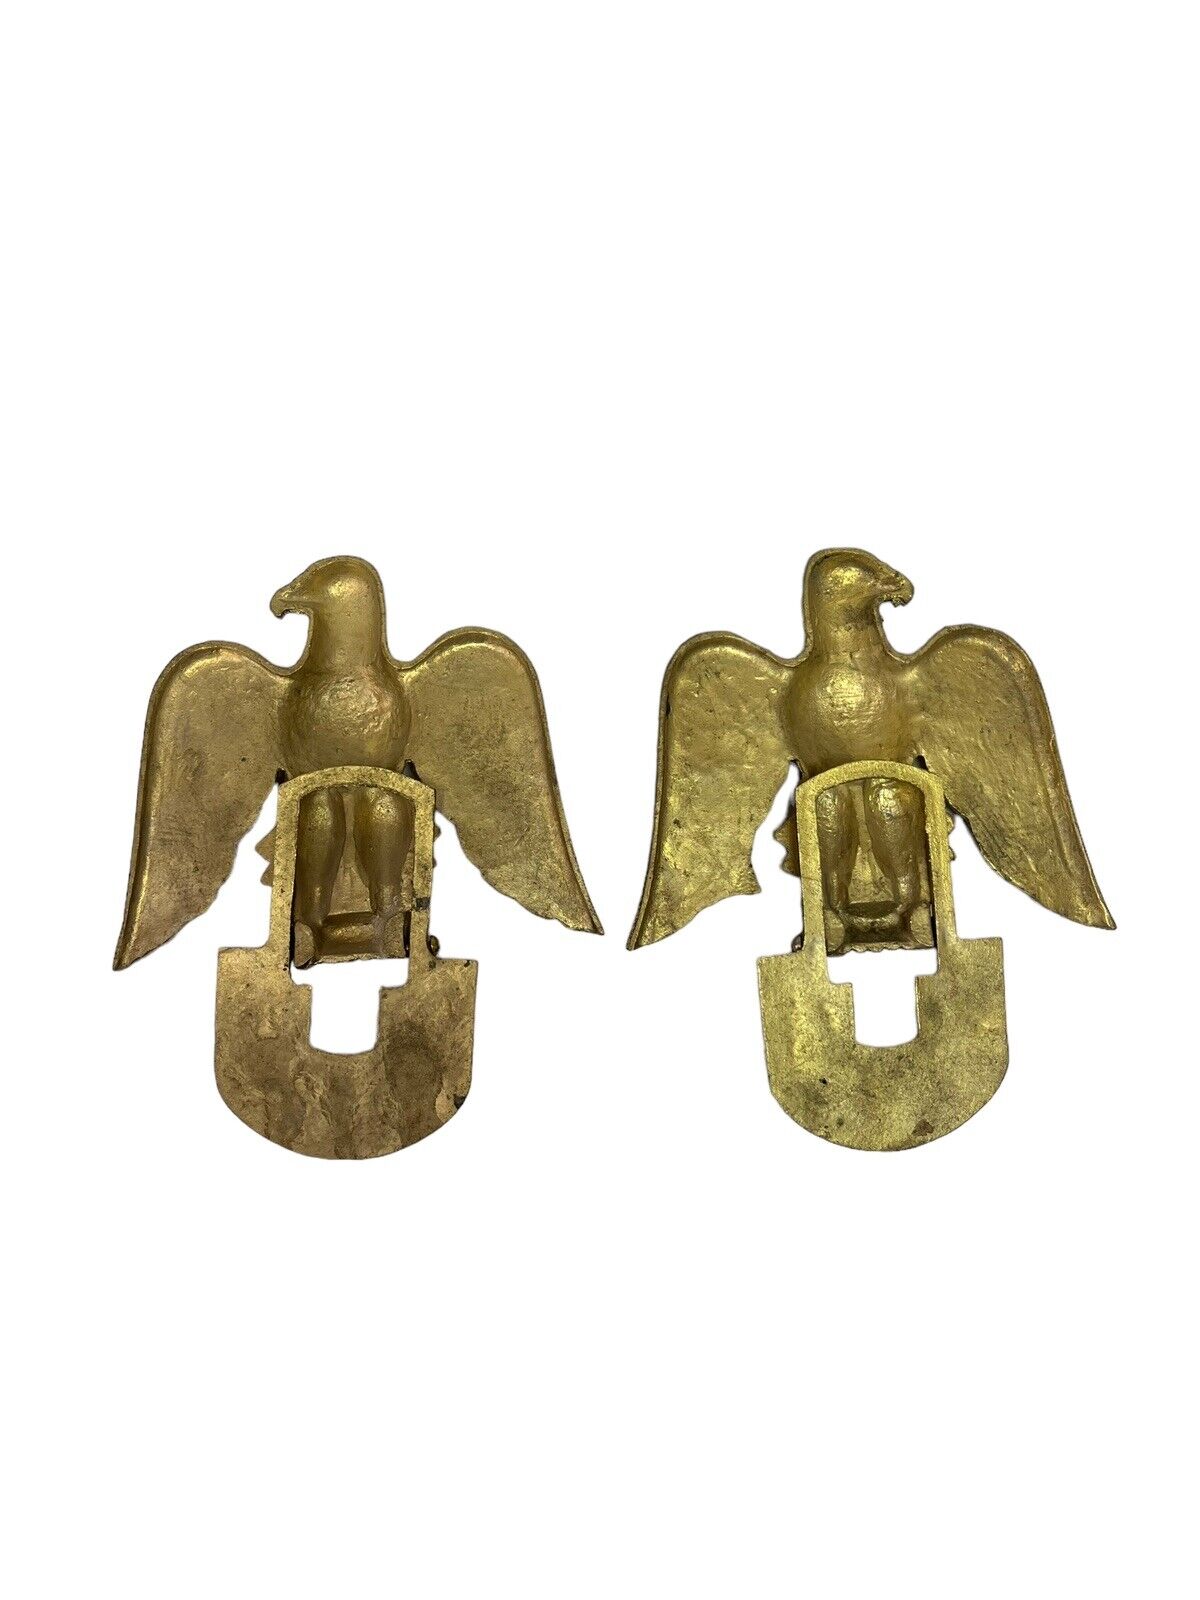 Vintage Pair 2 Brass Eagle Folding Book Ends Philadelphia Manufacturing Co.